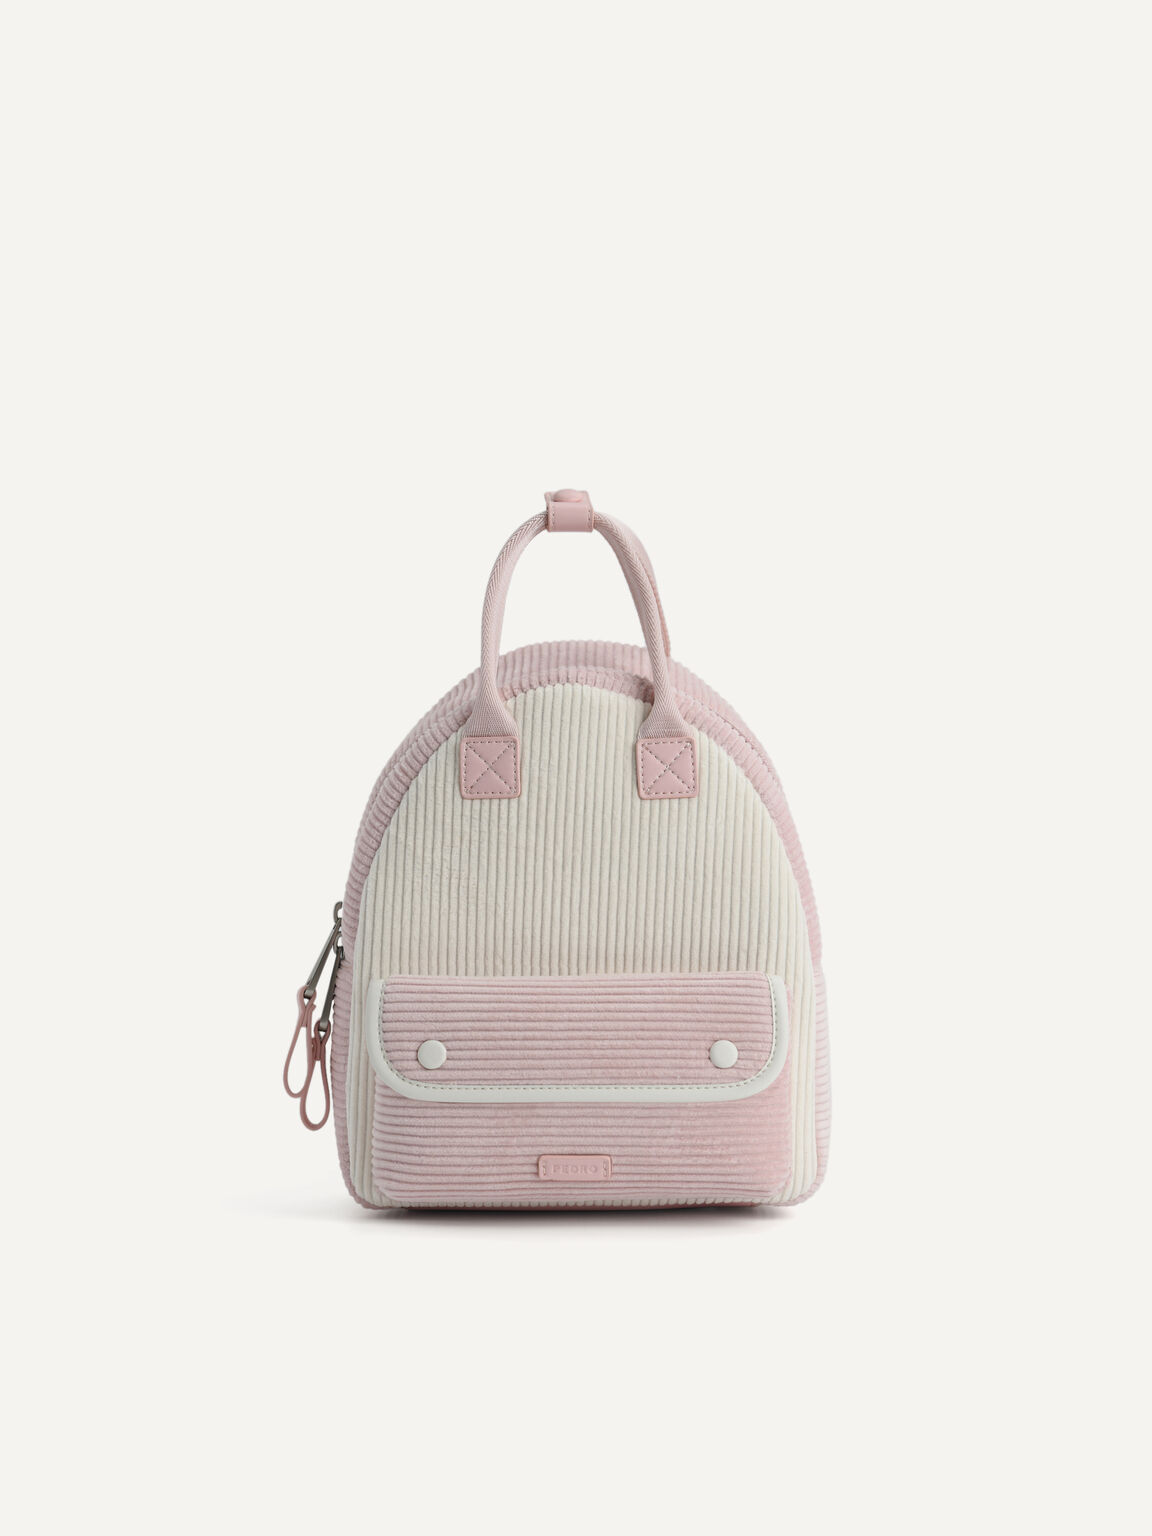 Corduroy Backpack, Light Pink